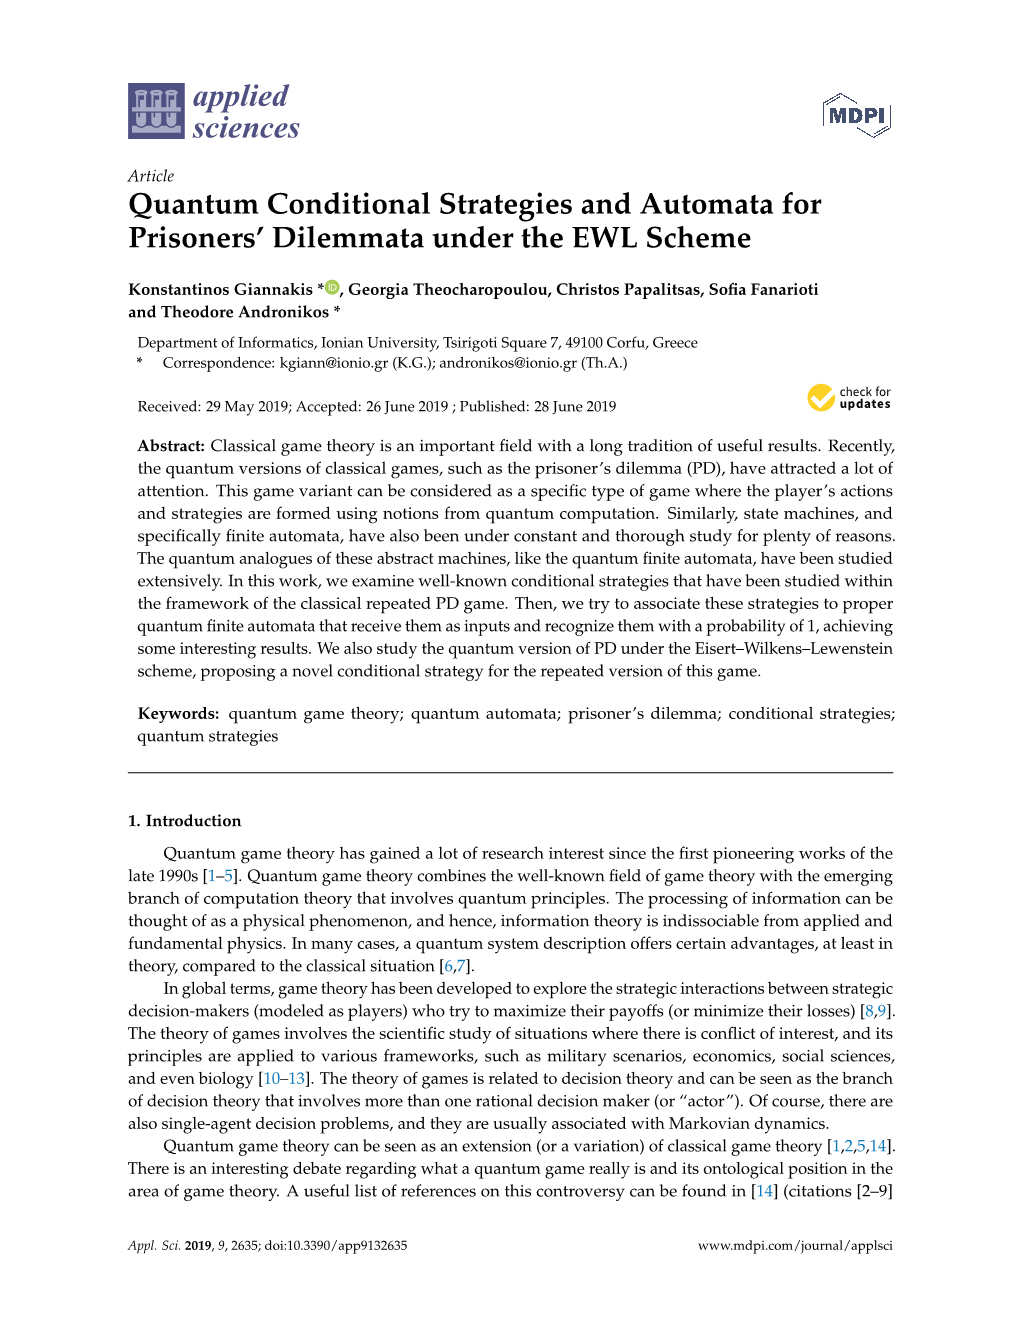 Quantum Conditional Strategies and Automata for Prisoners' Dilemmata Under the EWL Scheme